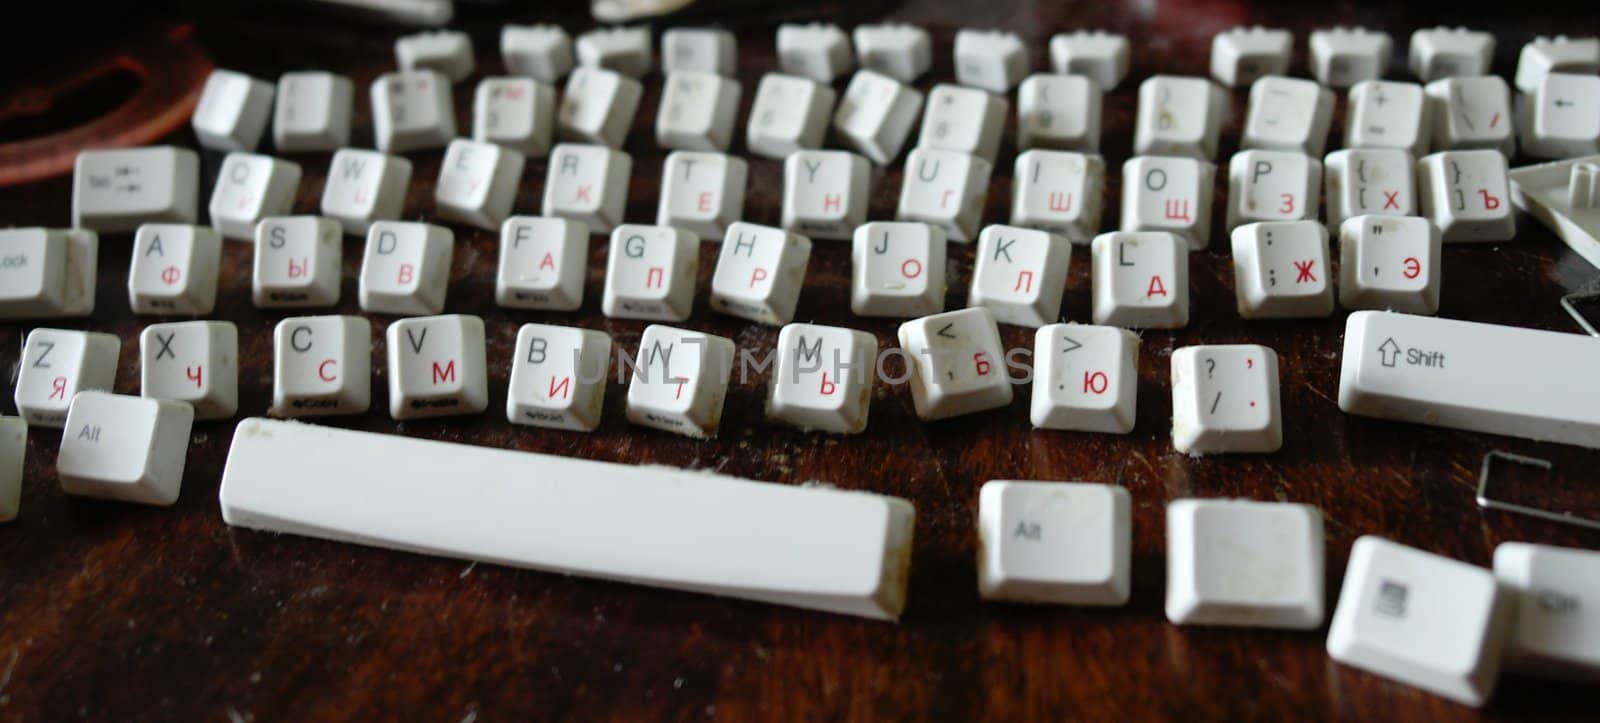 disassembled keyboard by stepanov